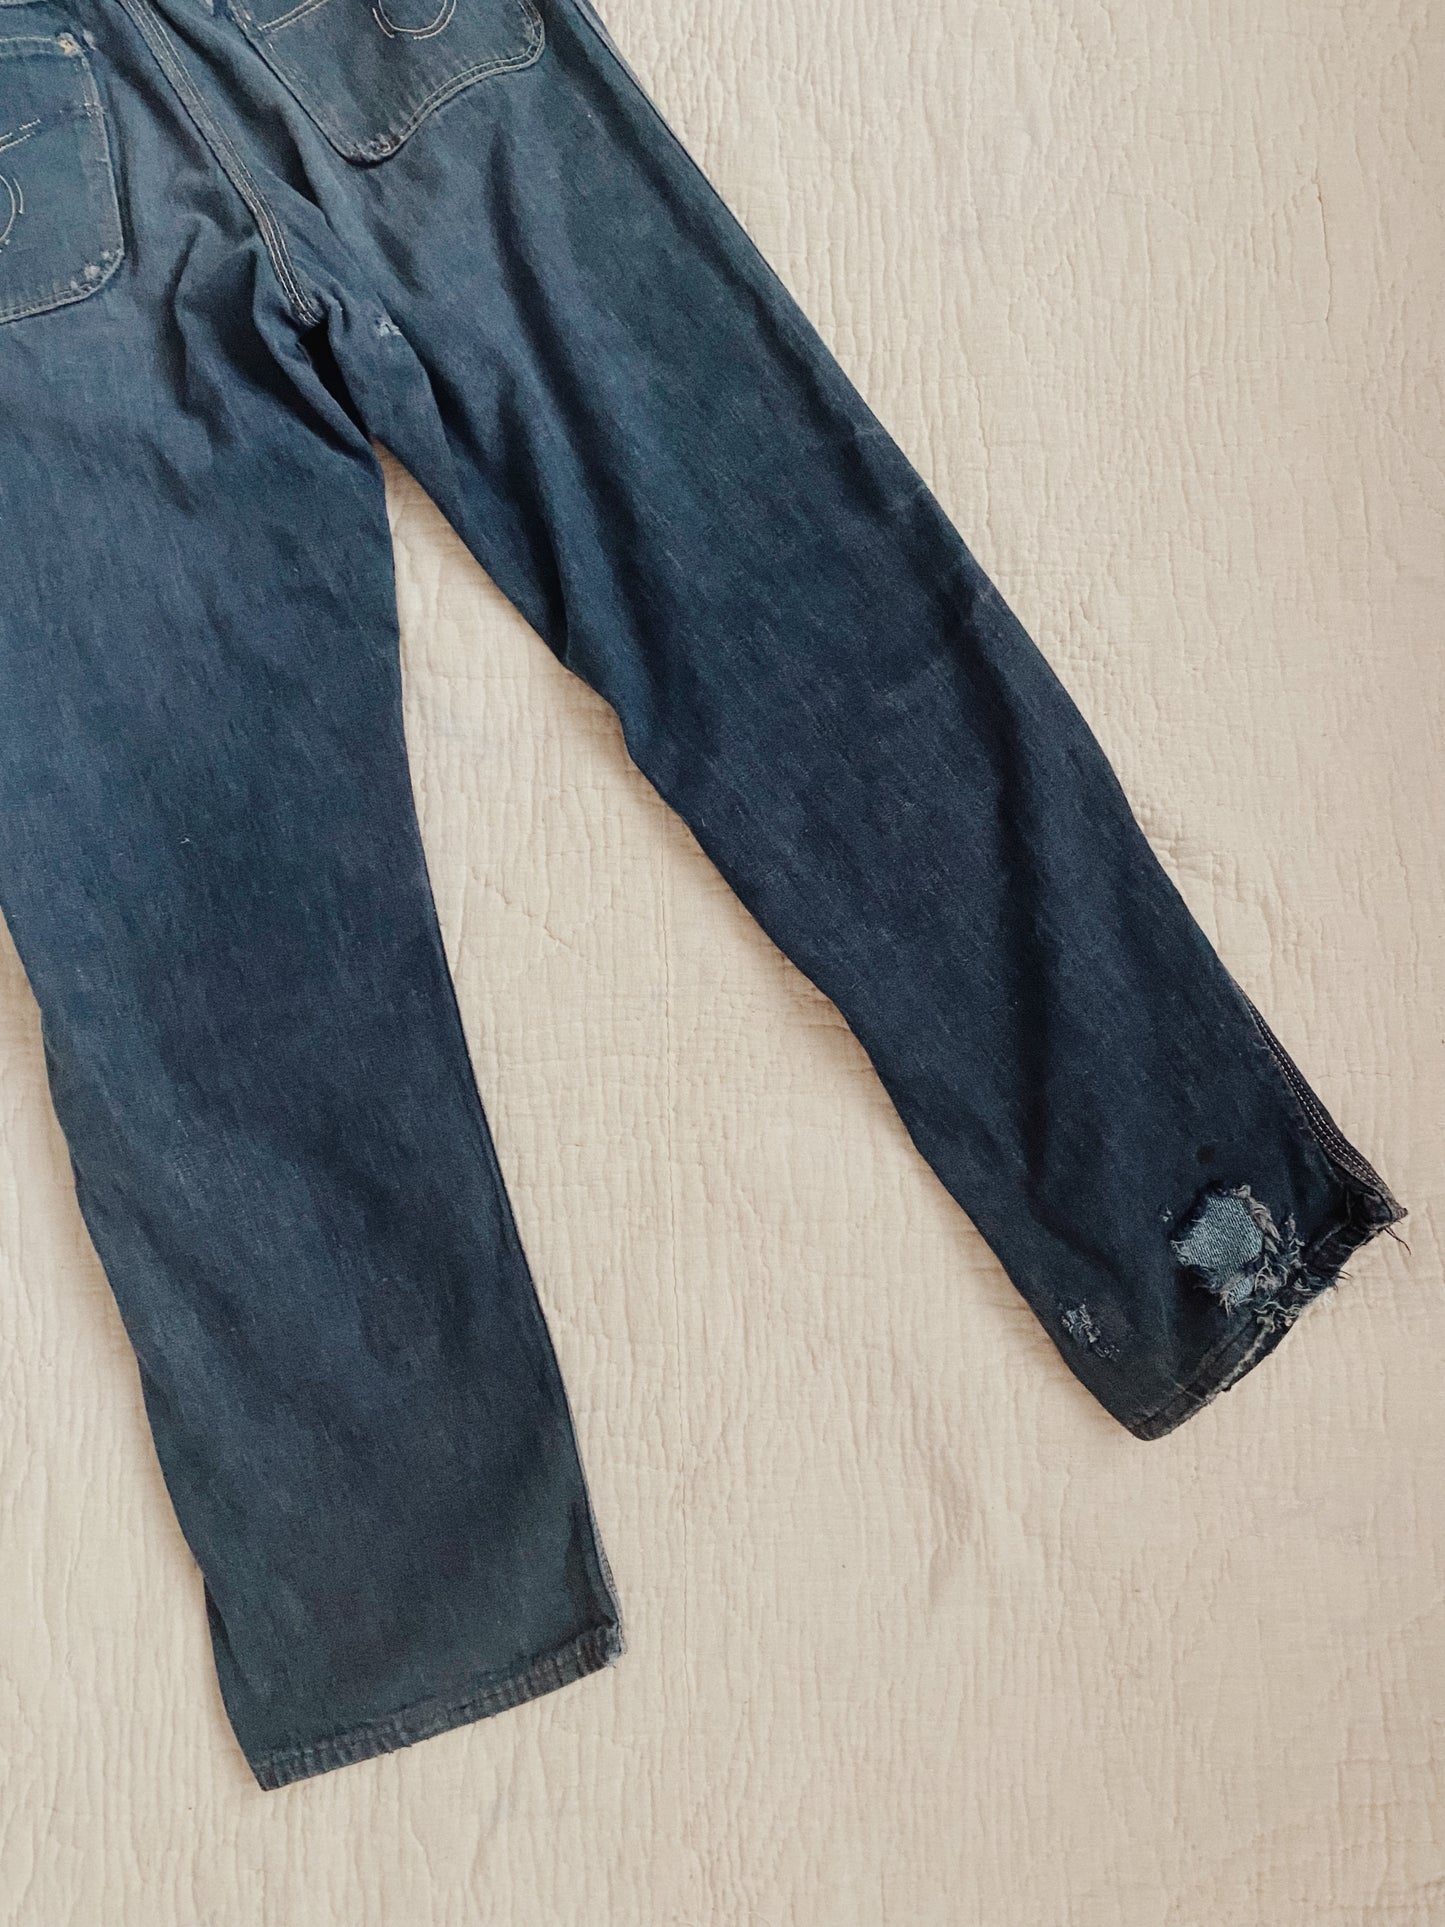 1950s Women’s Key High Waisted Denim Jeans- 29